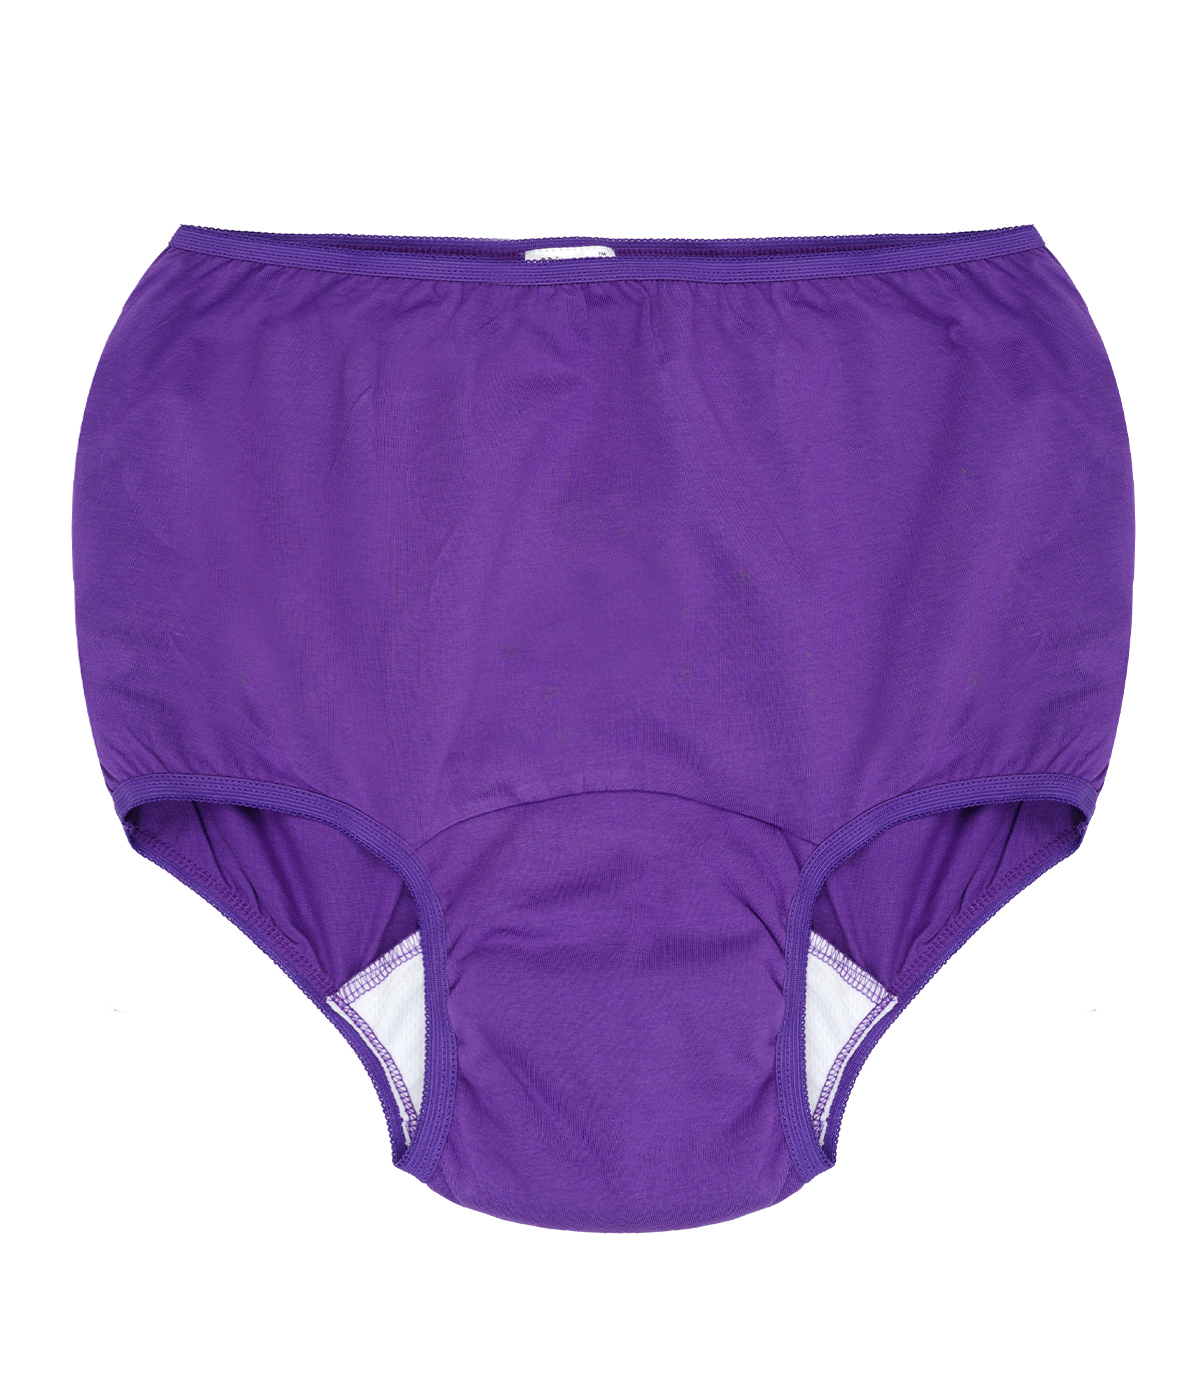 Wemyc Incontinence Underwear For Women I Washable & Reusable I